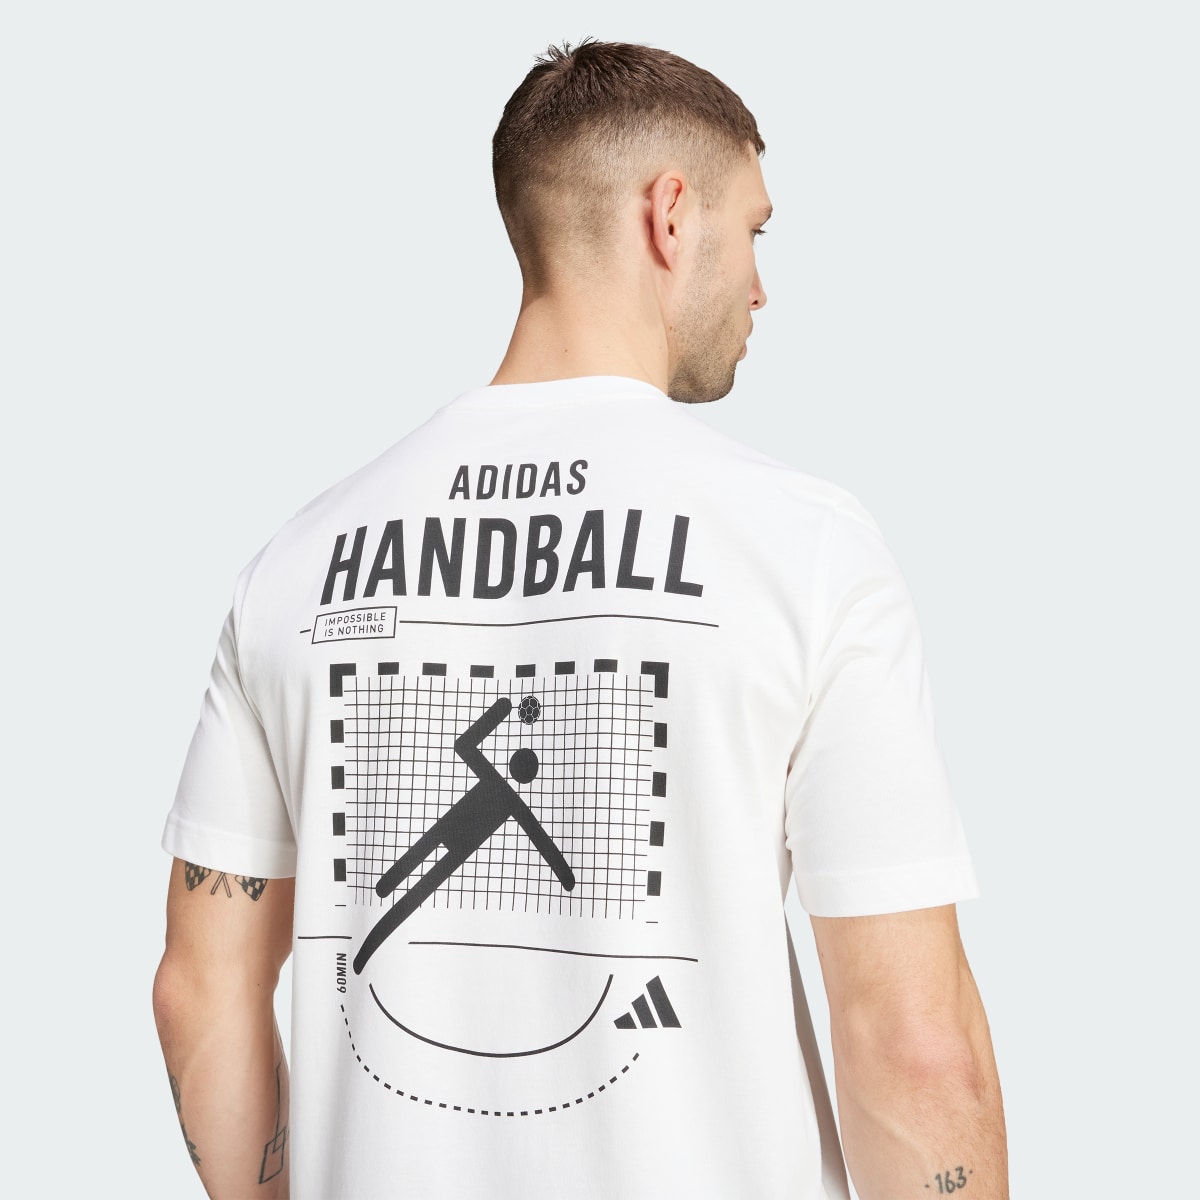 Adidas Handball Category Graphic T-Shirt. 7